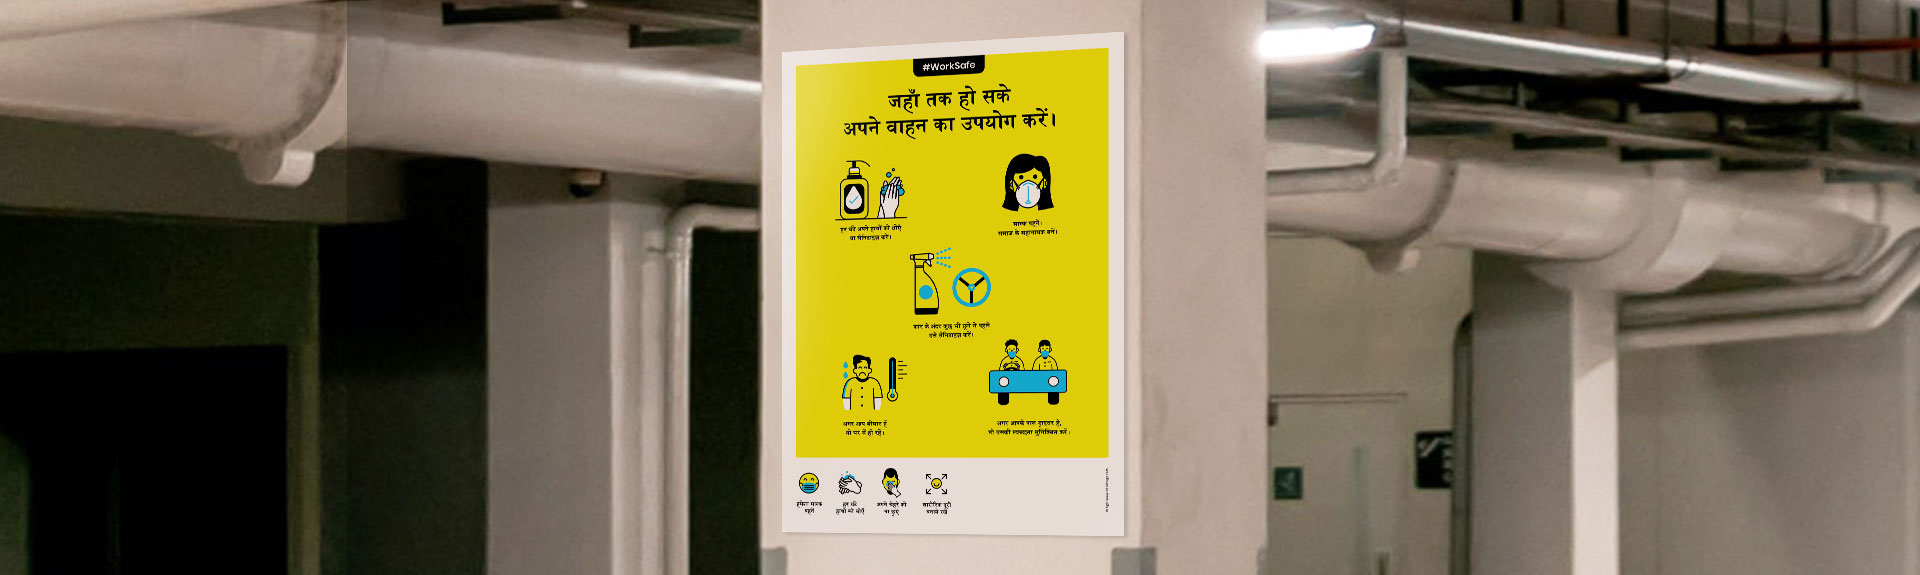 private-transport-hindi_web-banner